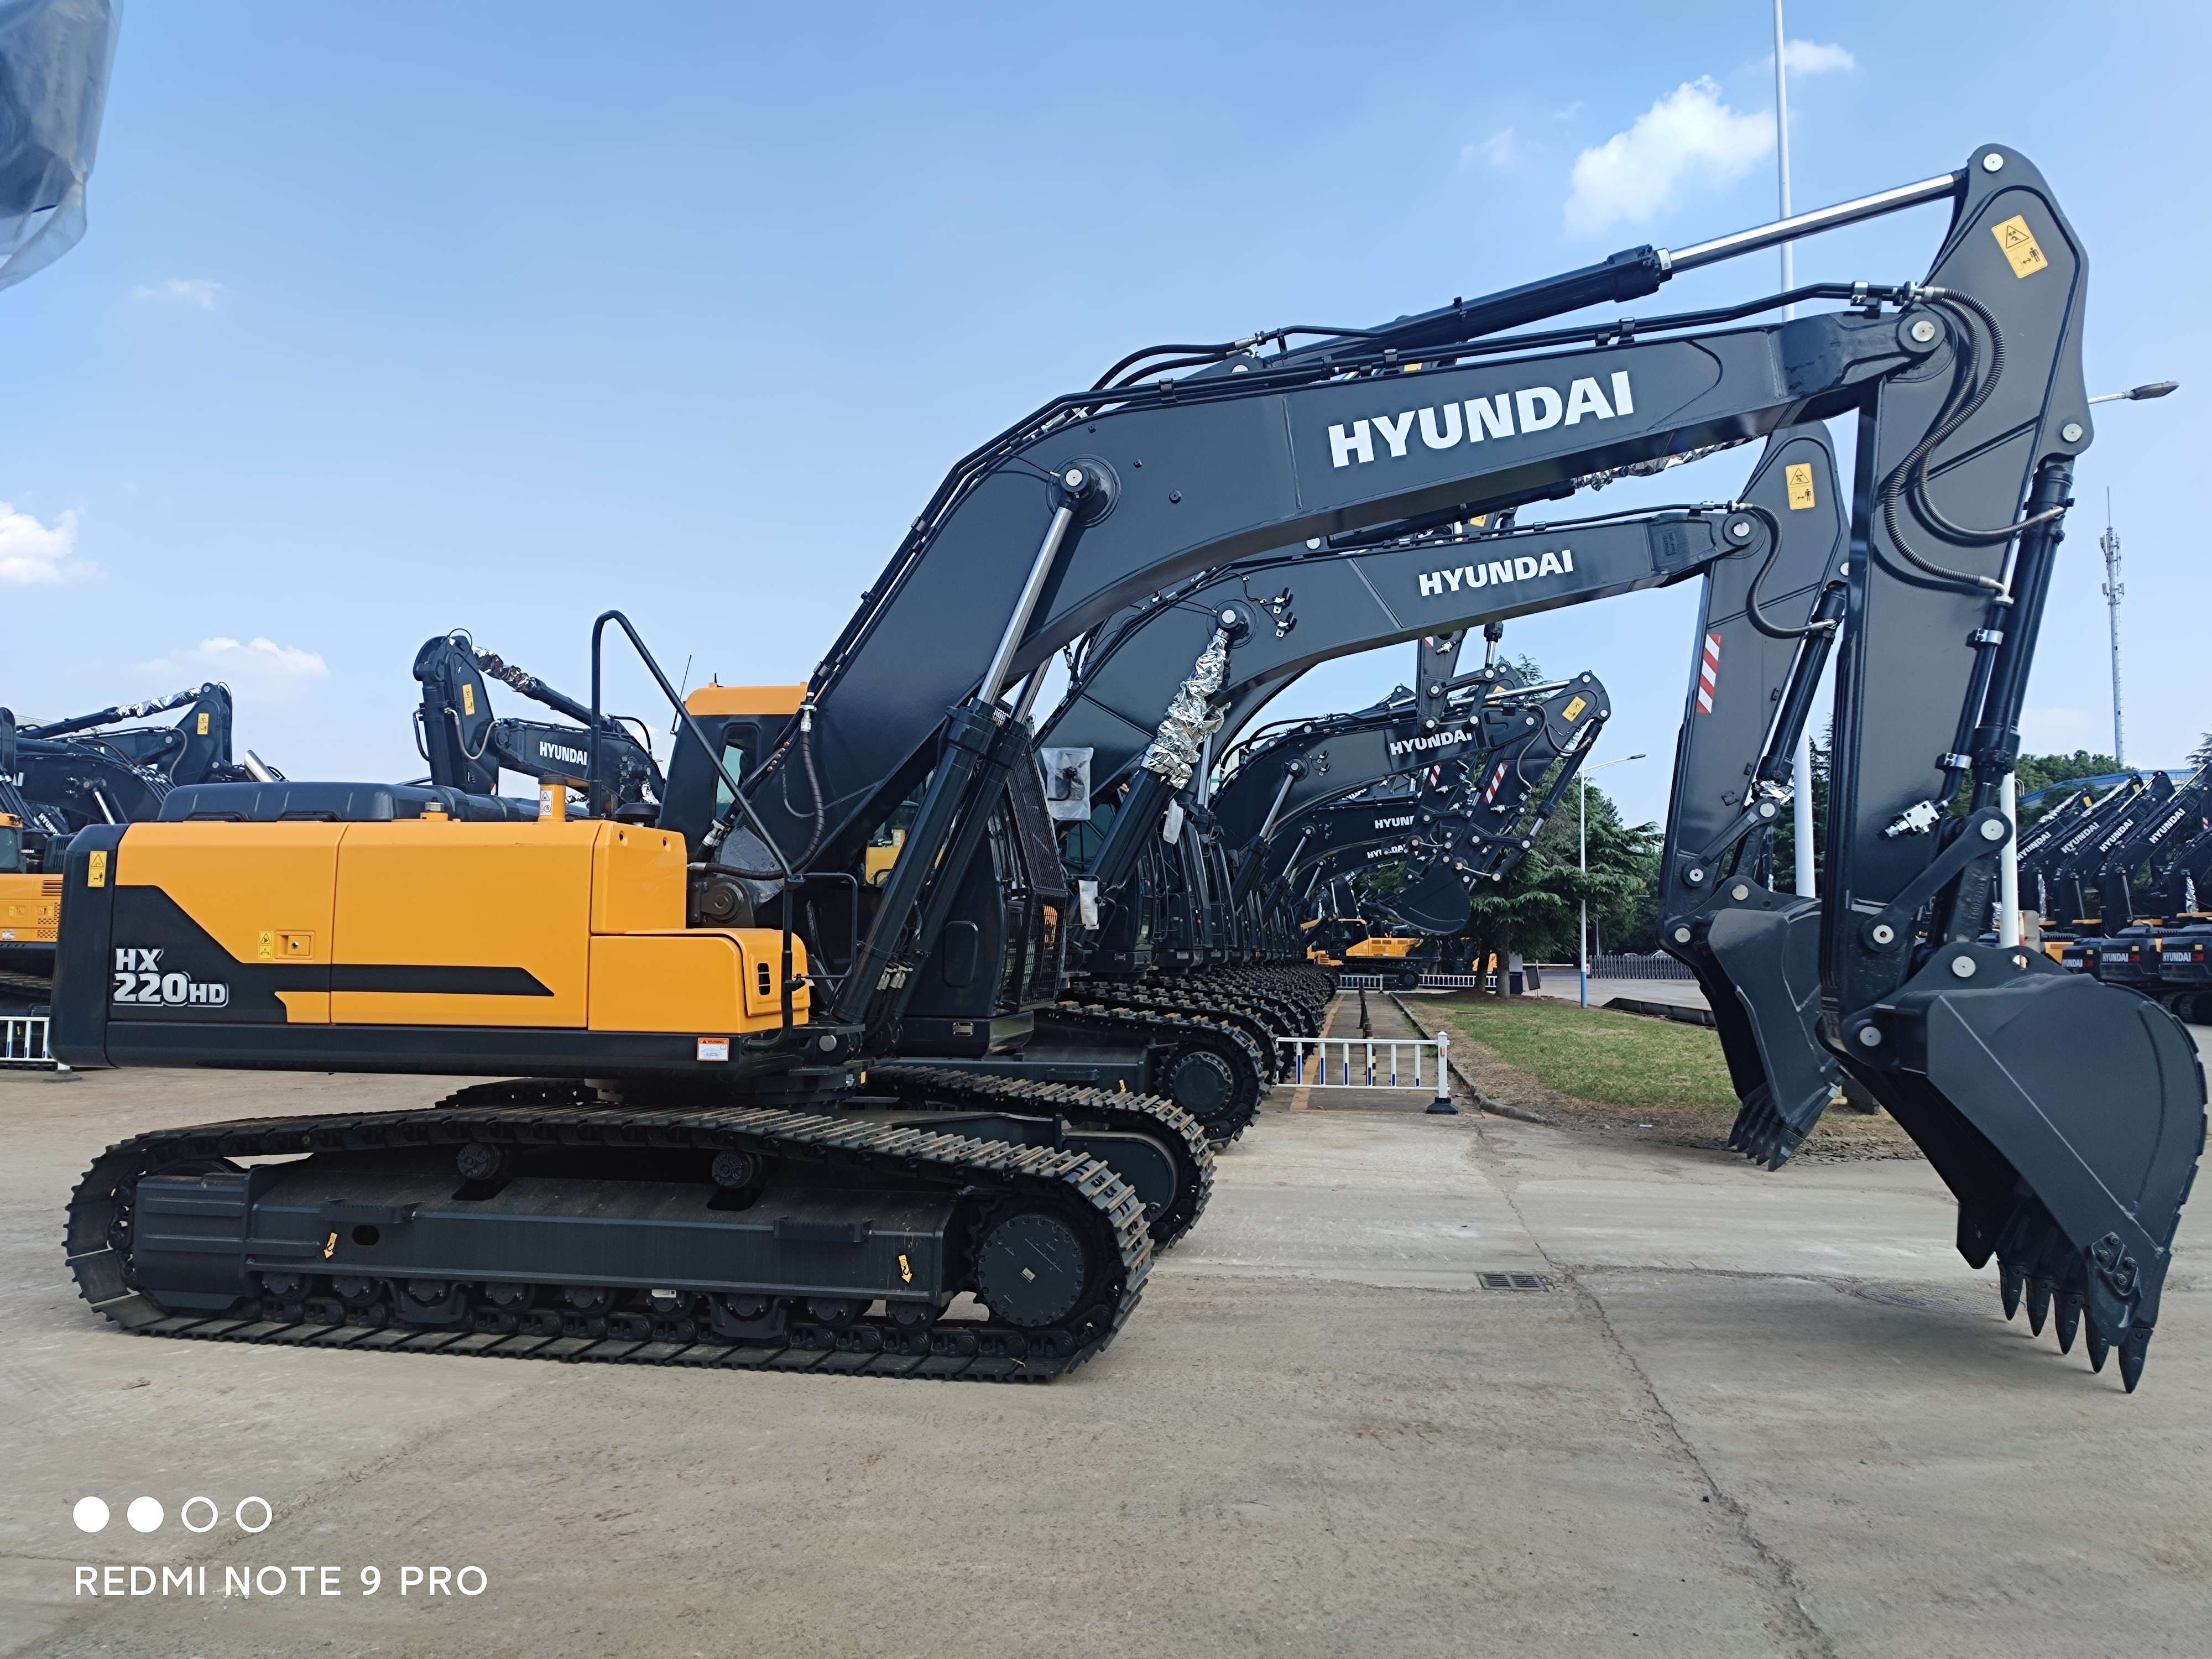 High Quality HYUNDAI HX220HD Excavator with Good Price